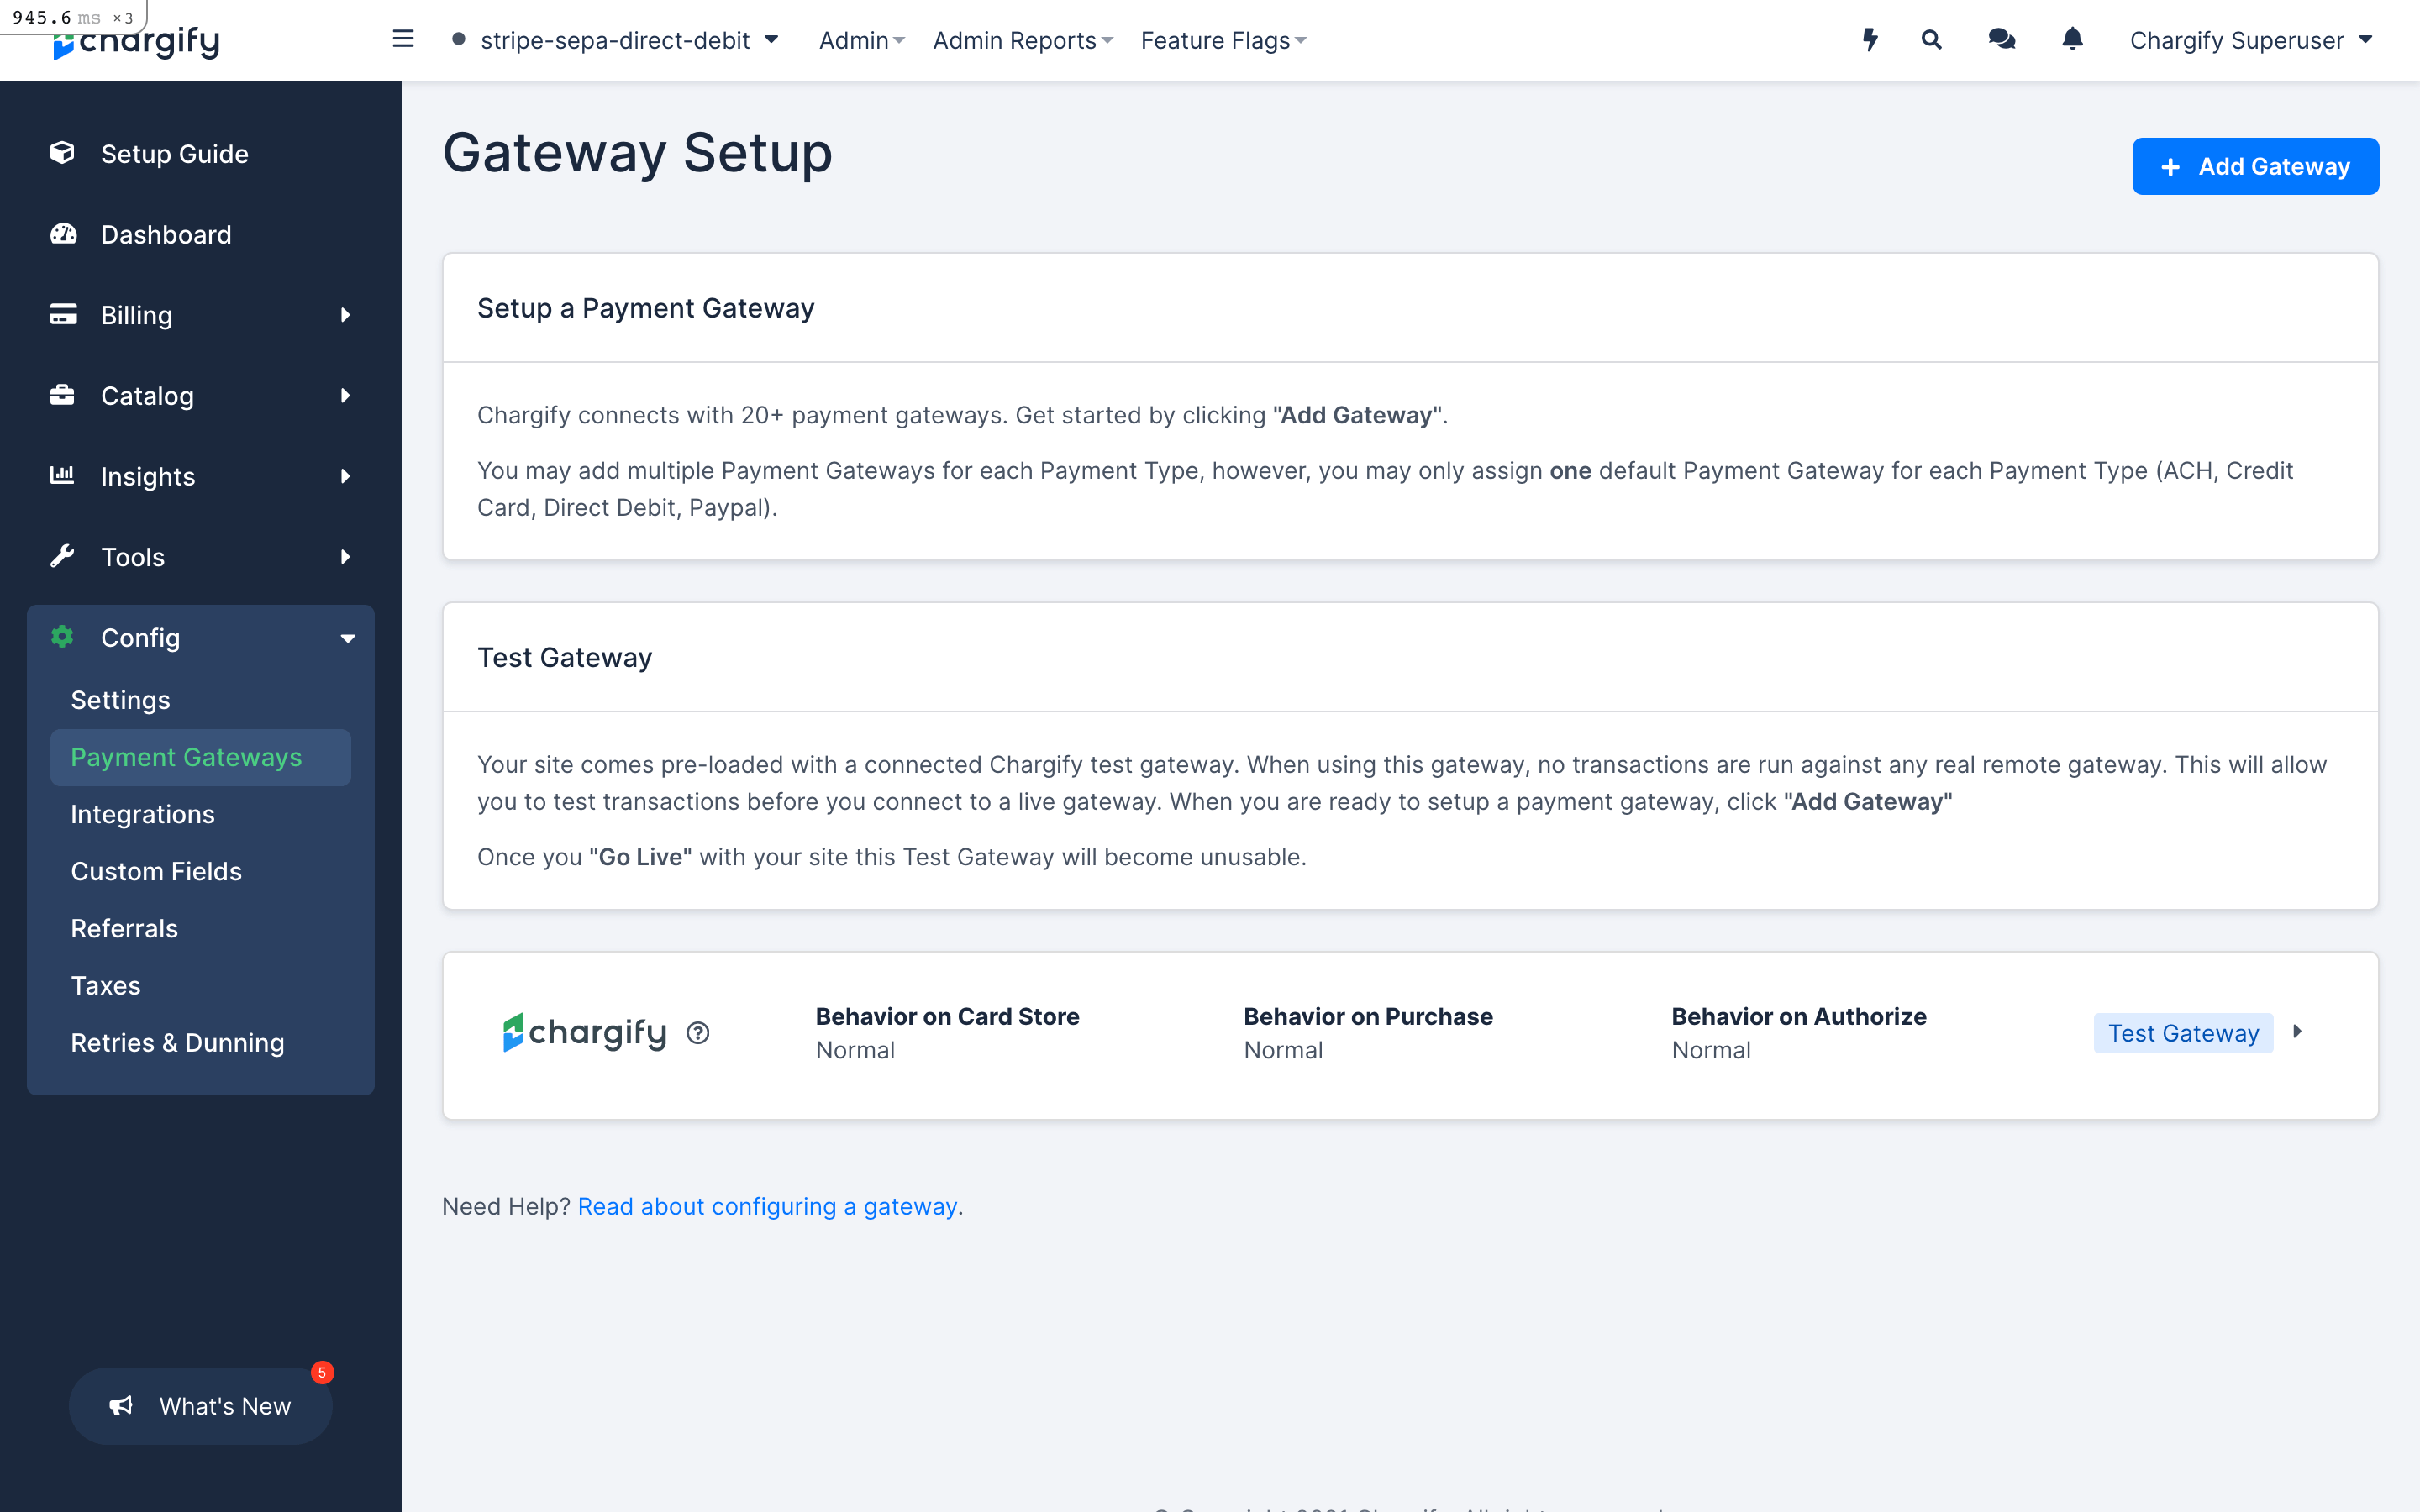 adding_gateway_step_1.png